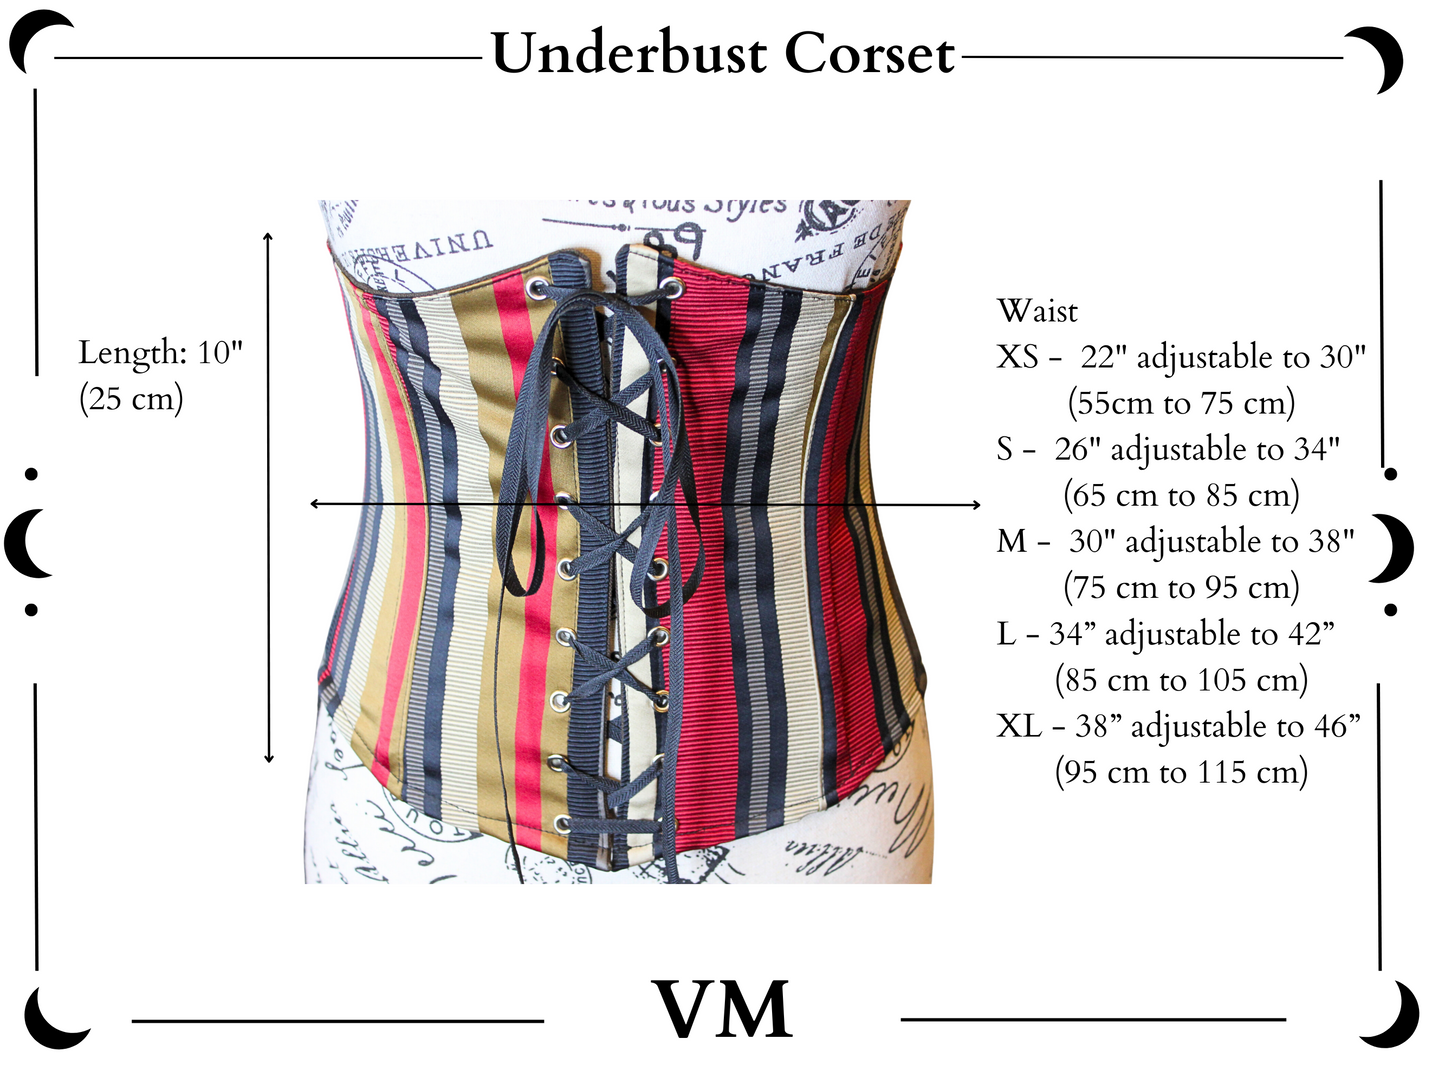 The VM Lace-up Underbust Corset